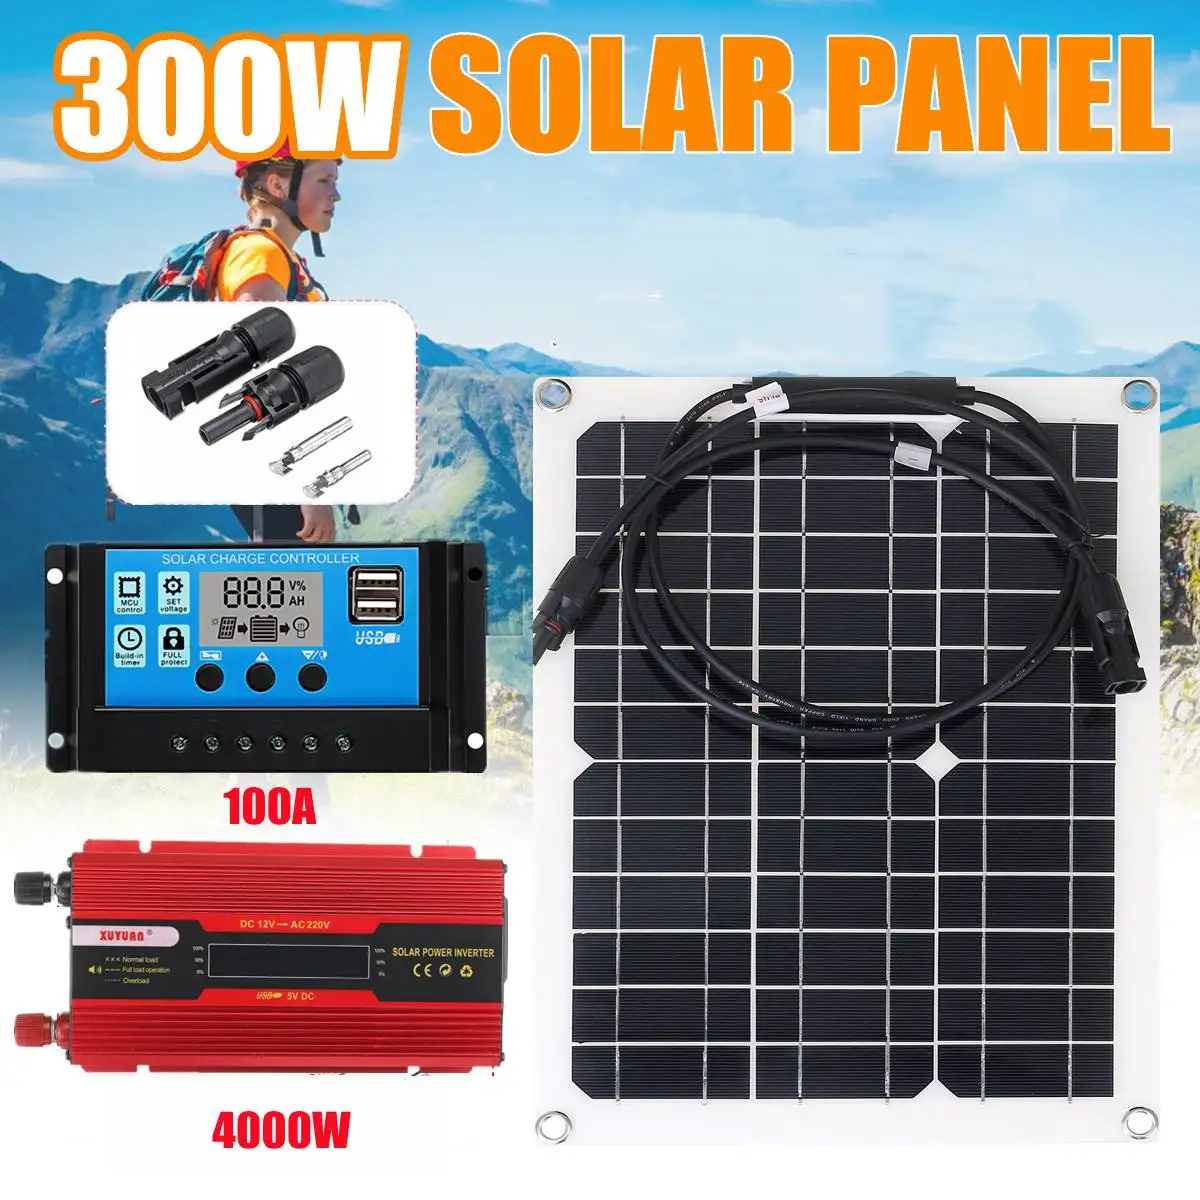 

4000W Solar Power System 220V/110V Inverter Kit 300W Solar Panel Battery Charger Complete Controller Home Grid Camp Phone